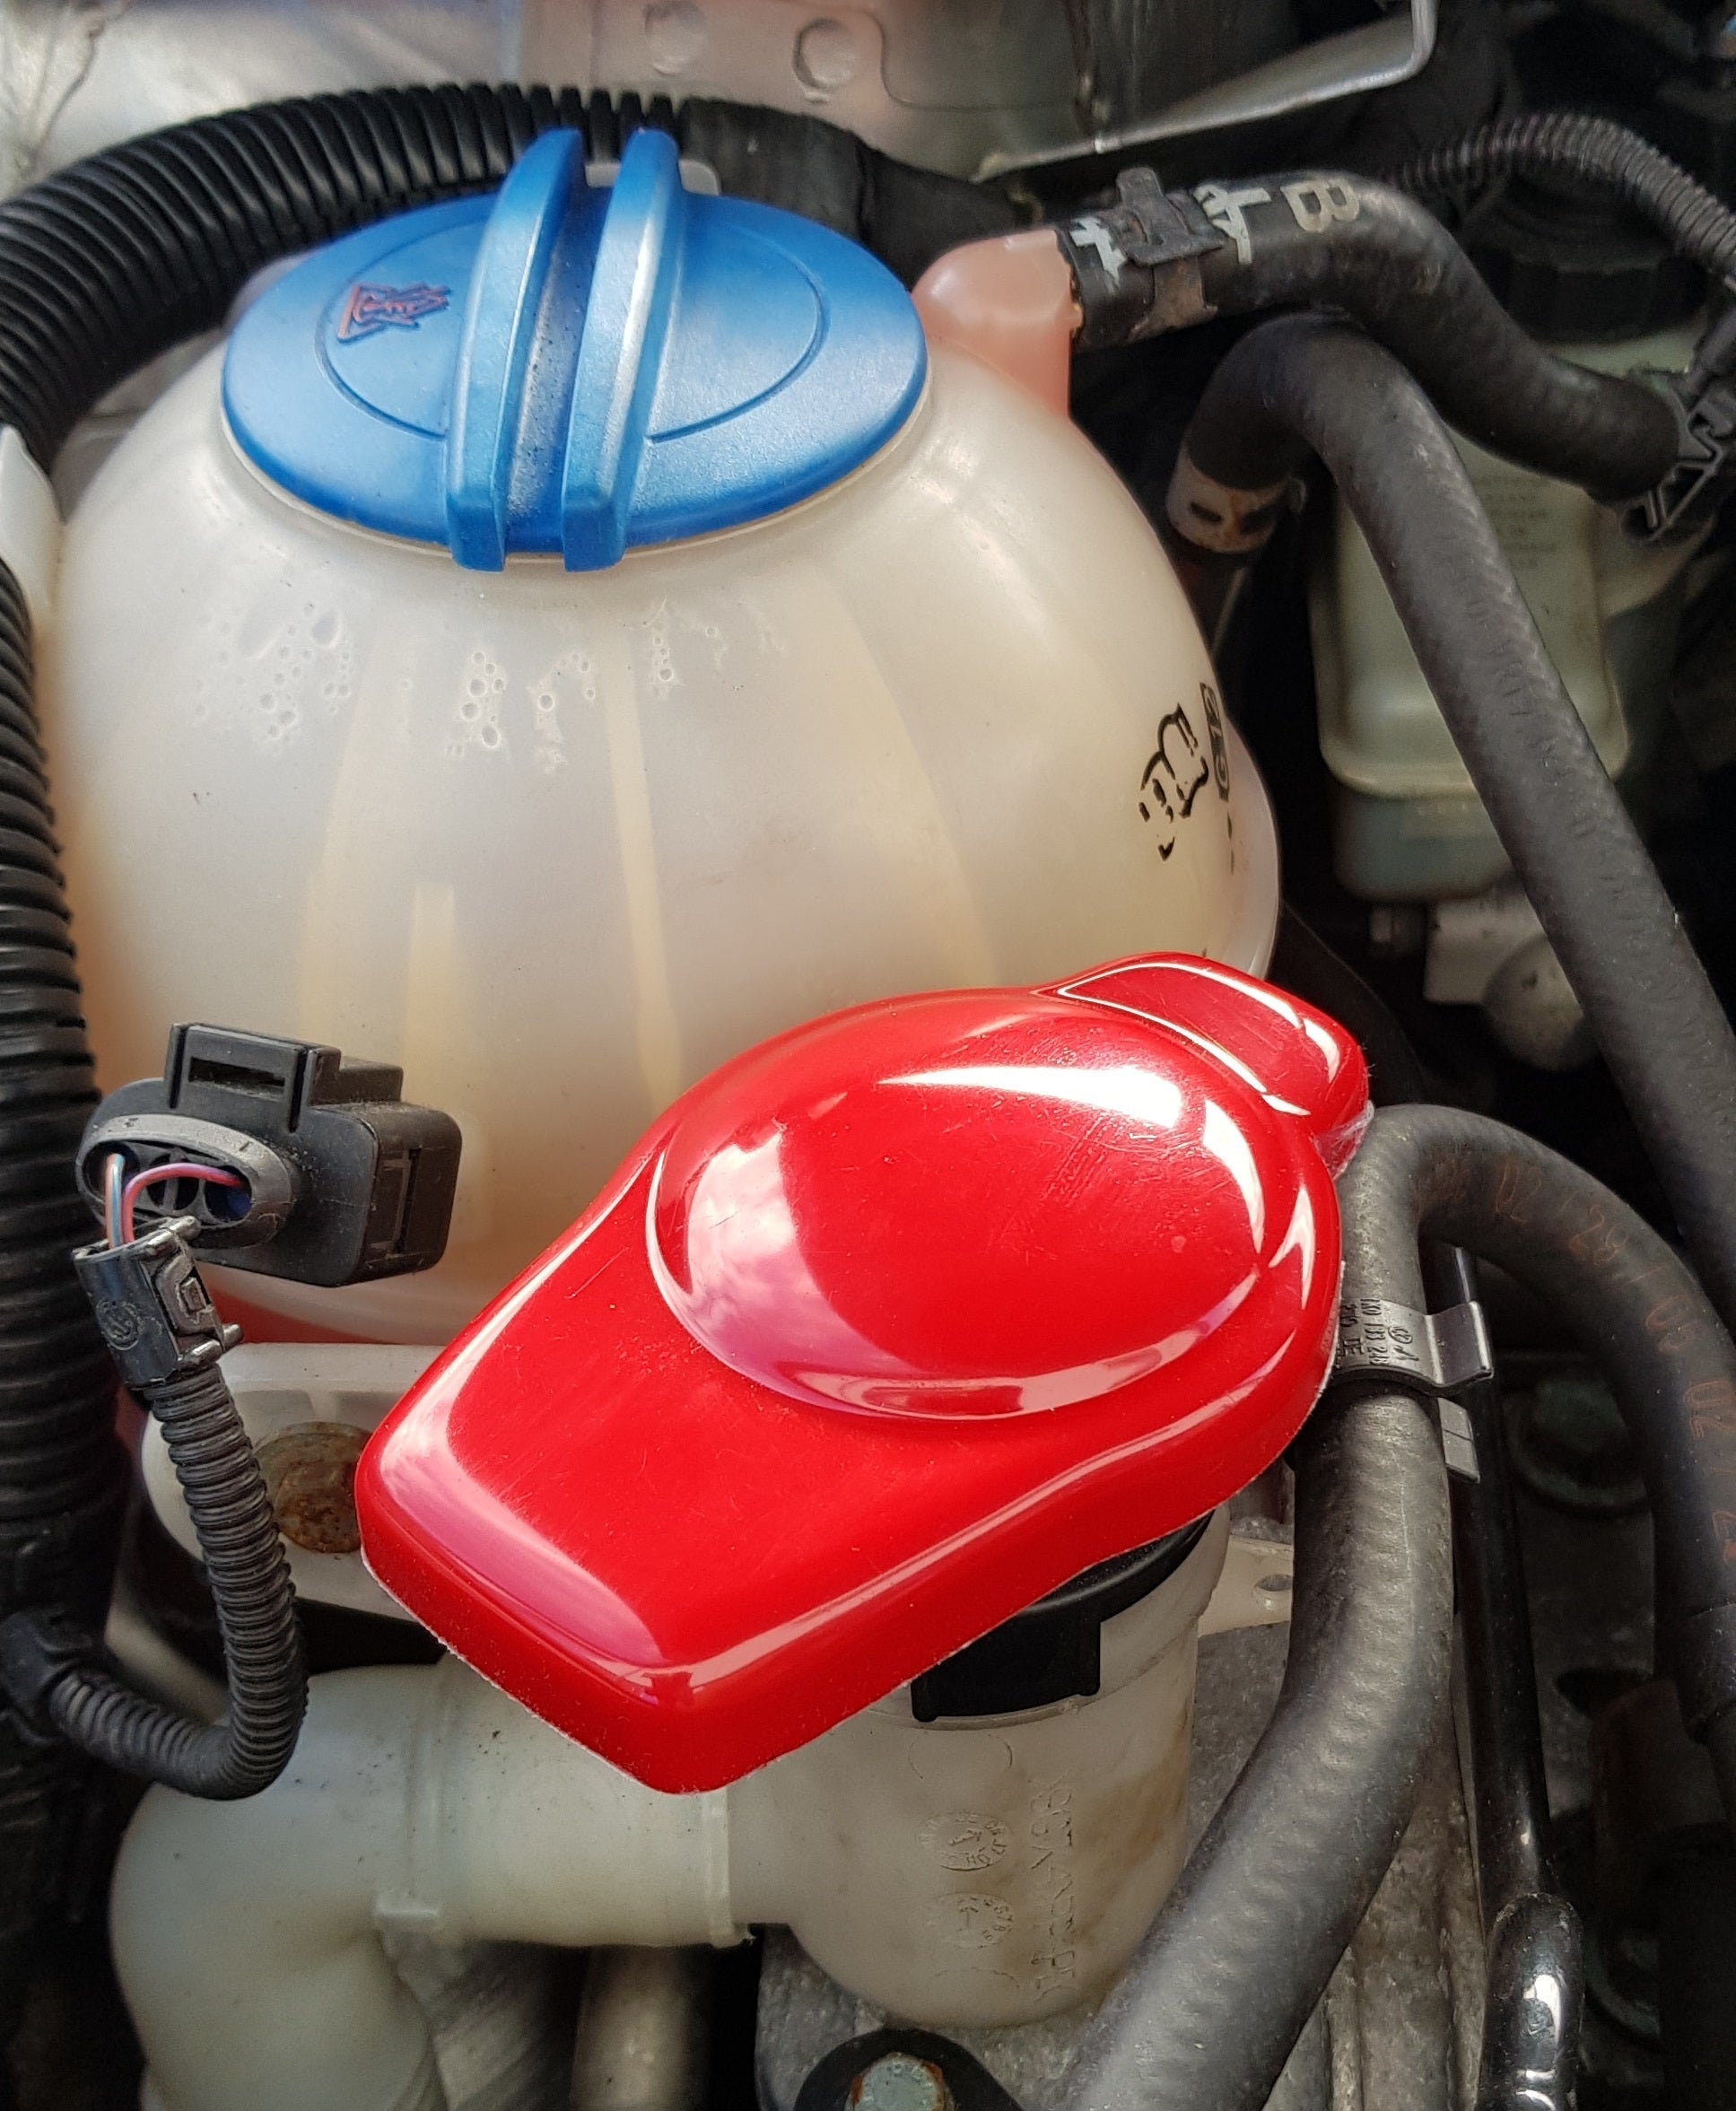 Proform Washer Bottle Cap Cover - Volkswagen Scirocco (Plastic Finishes)